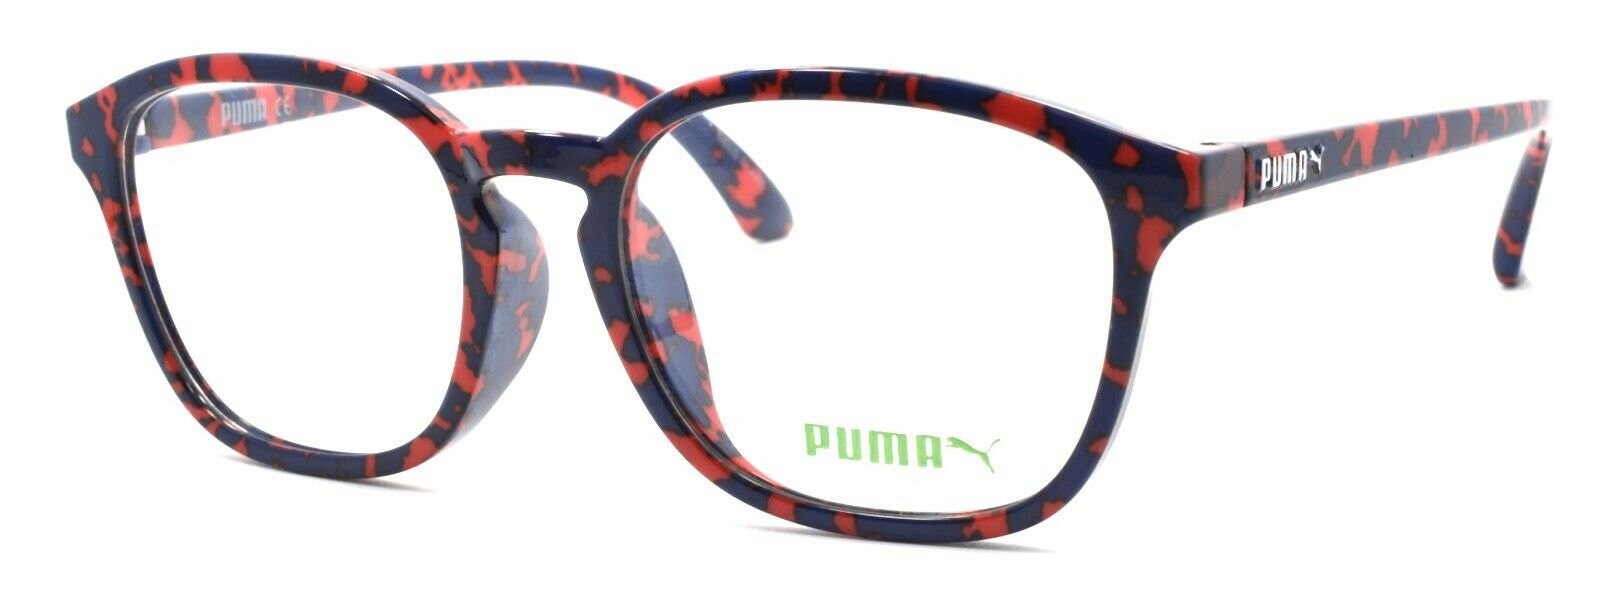 1-PUMA PU0080OA 002 Men's Eyeglasses Frames 51-18-150 Red / Blue + CASE-889652029894-IKSpecs